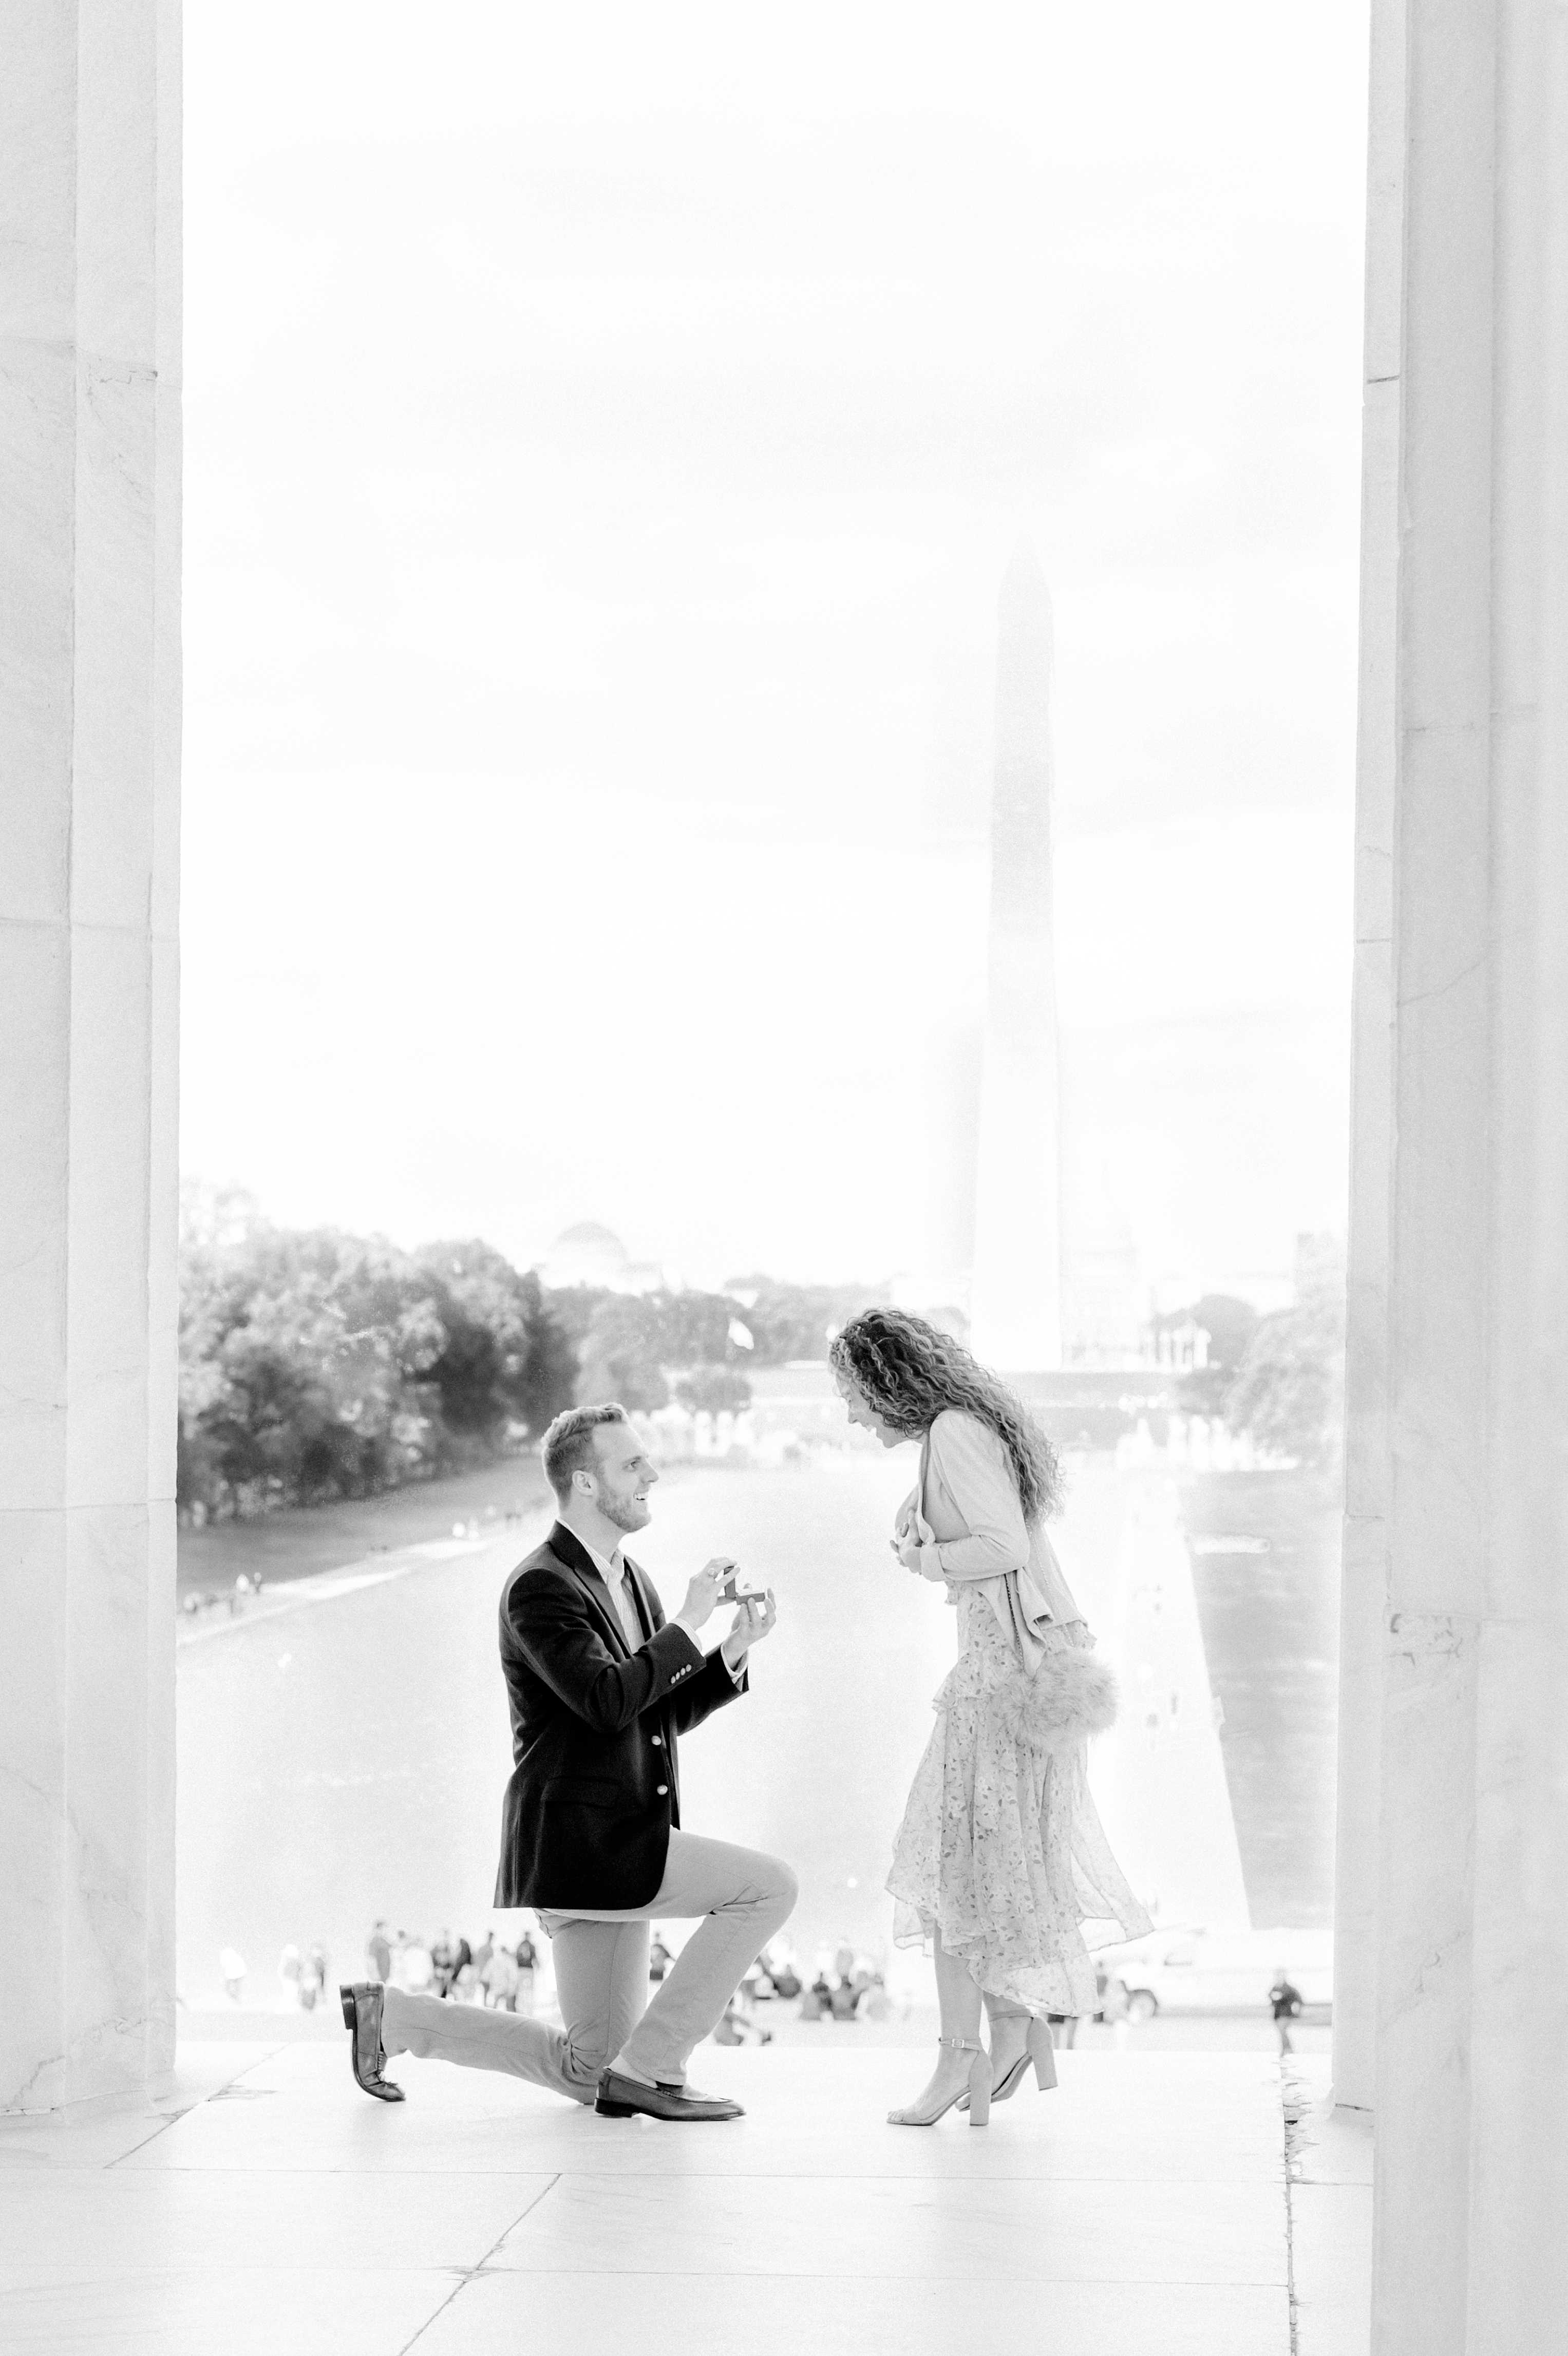 A Lincoln Memorial Proposal photo